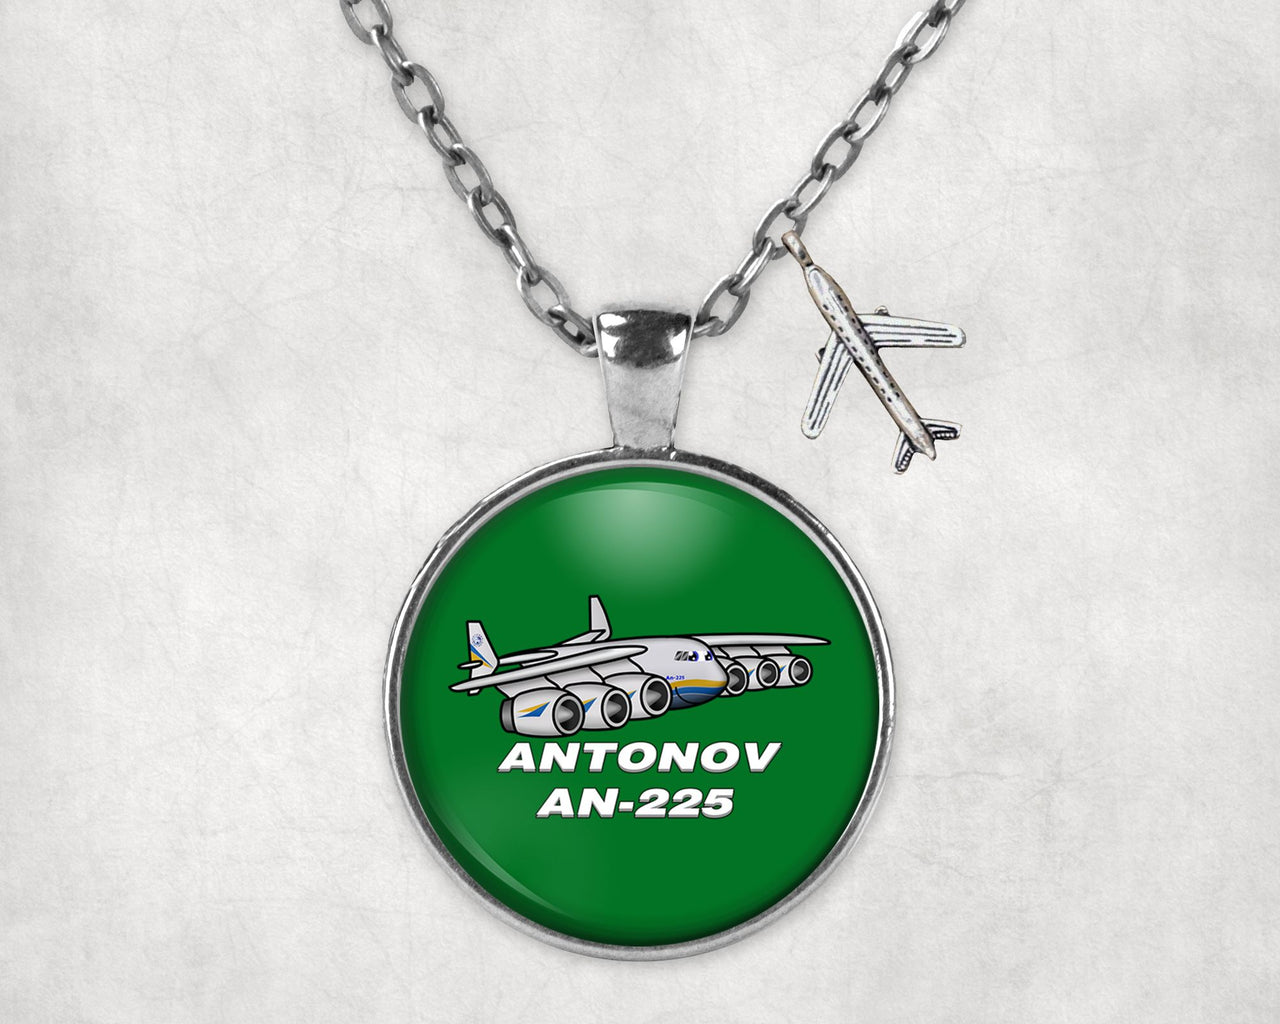 Antonov AN-225 (25) Designed Necklaces